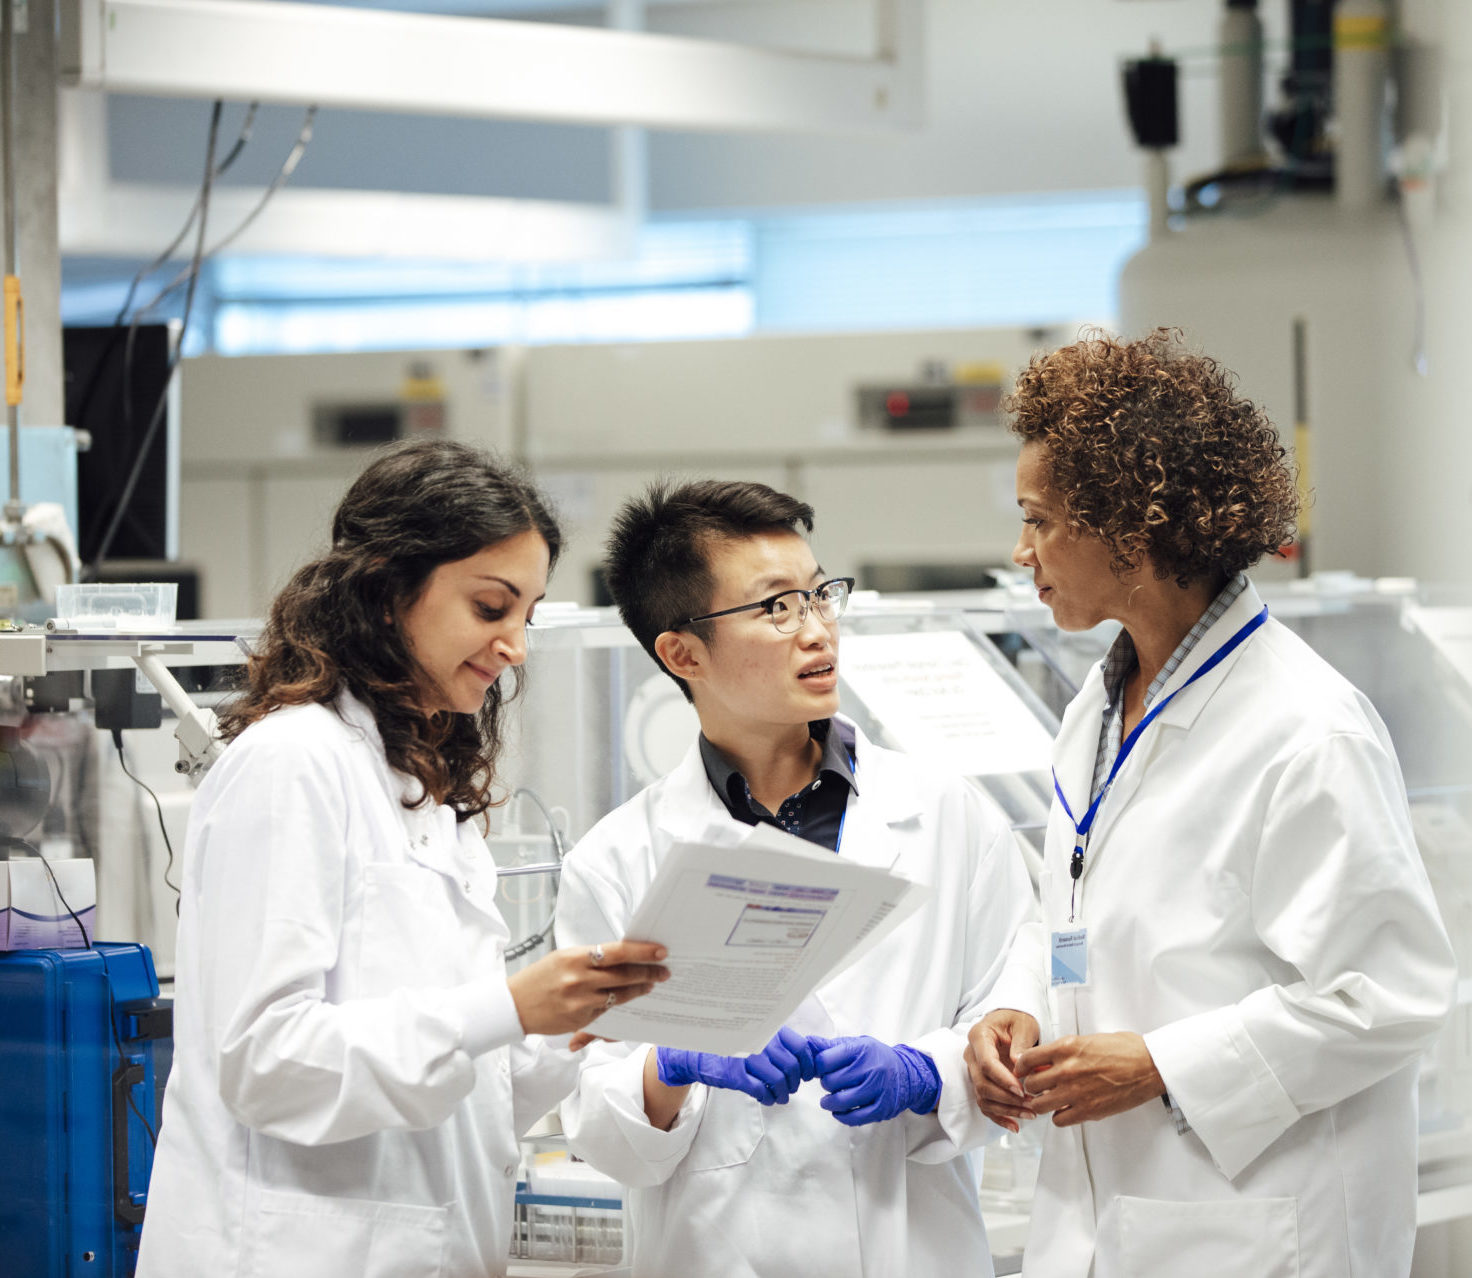 technicians wearing lab coats having a conversation